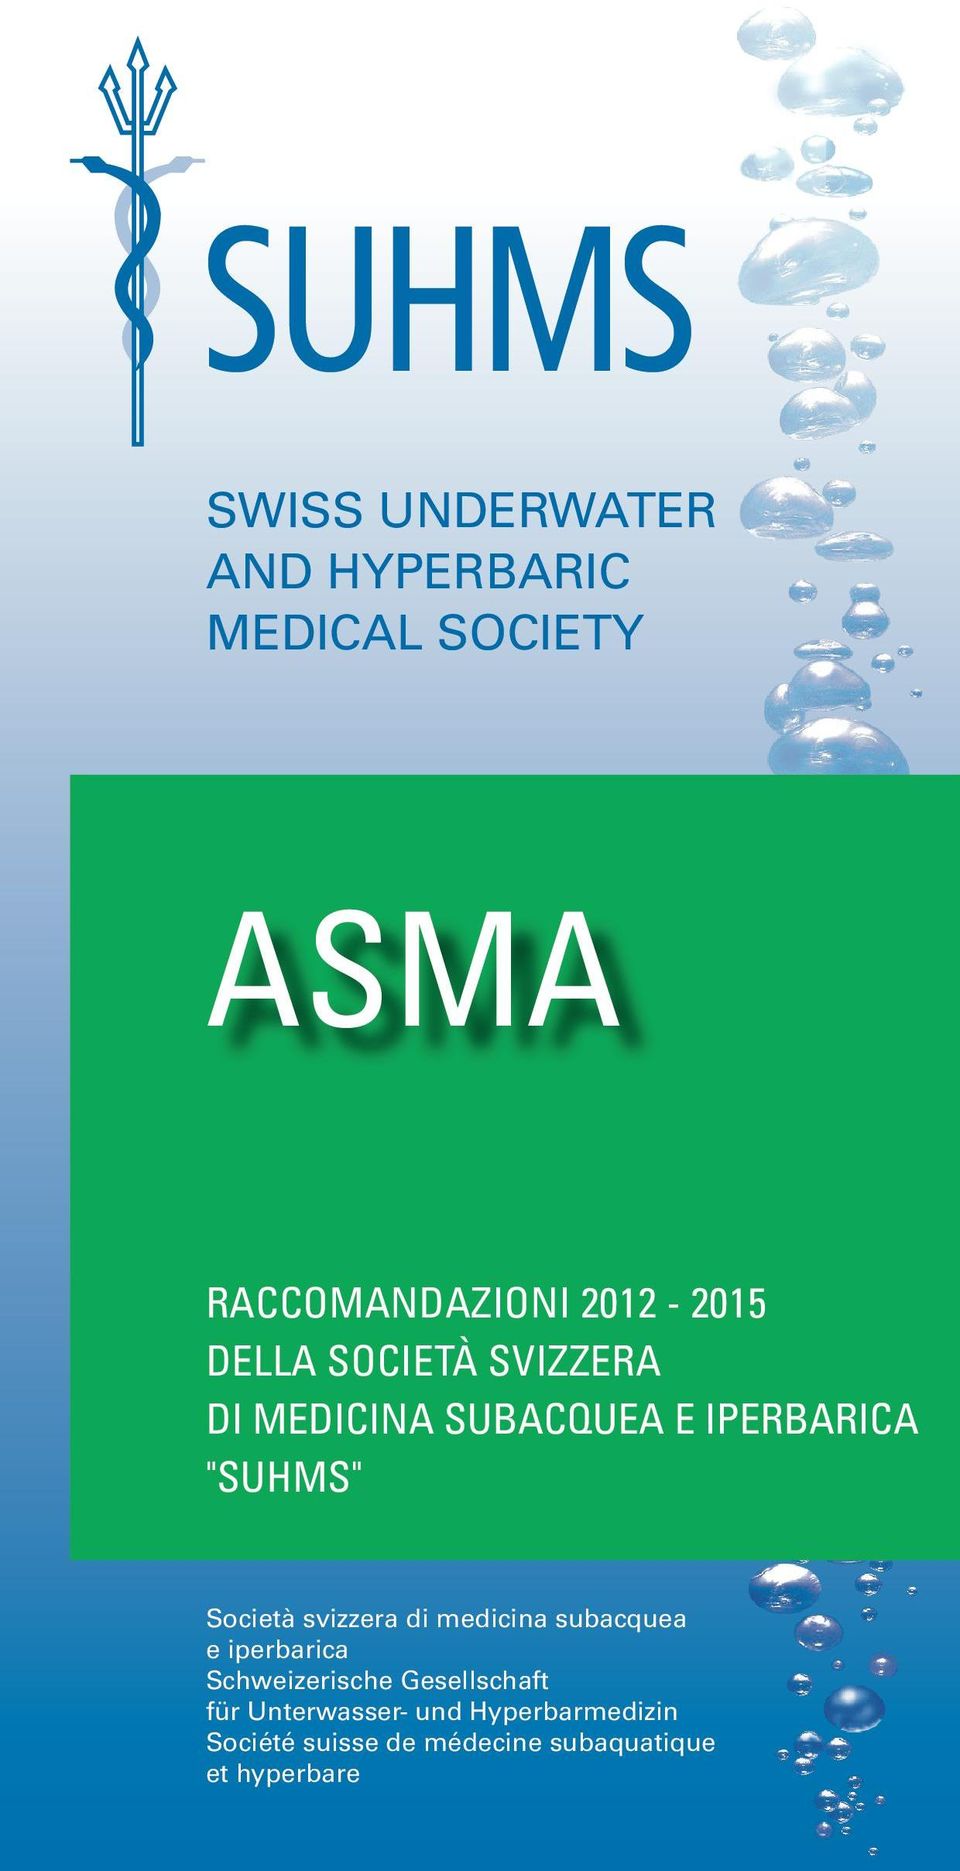 Società svizzera di medicina subacquea e iperbarica Schweizerische Gesellschaft